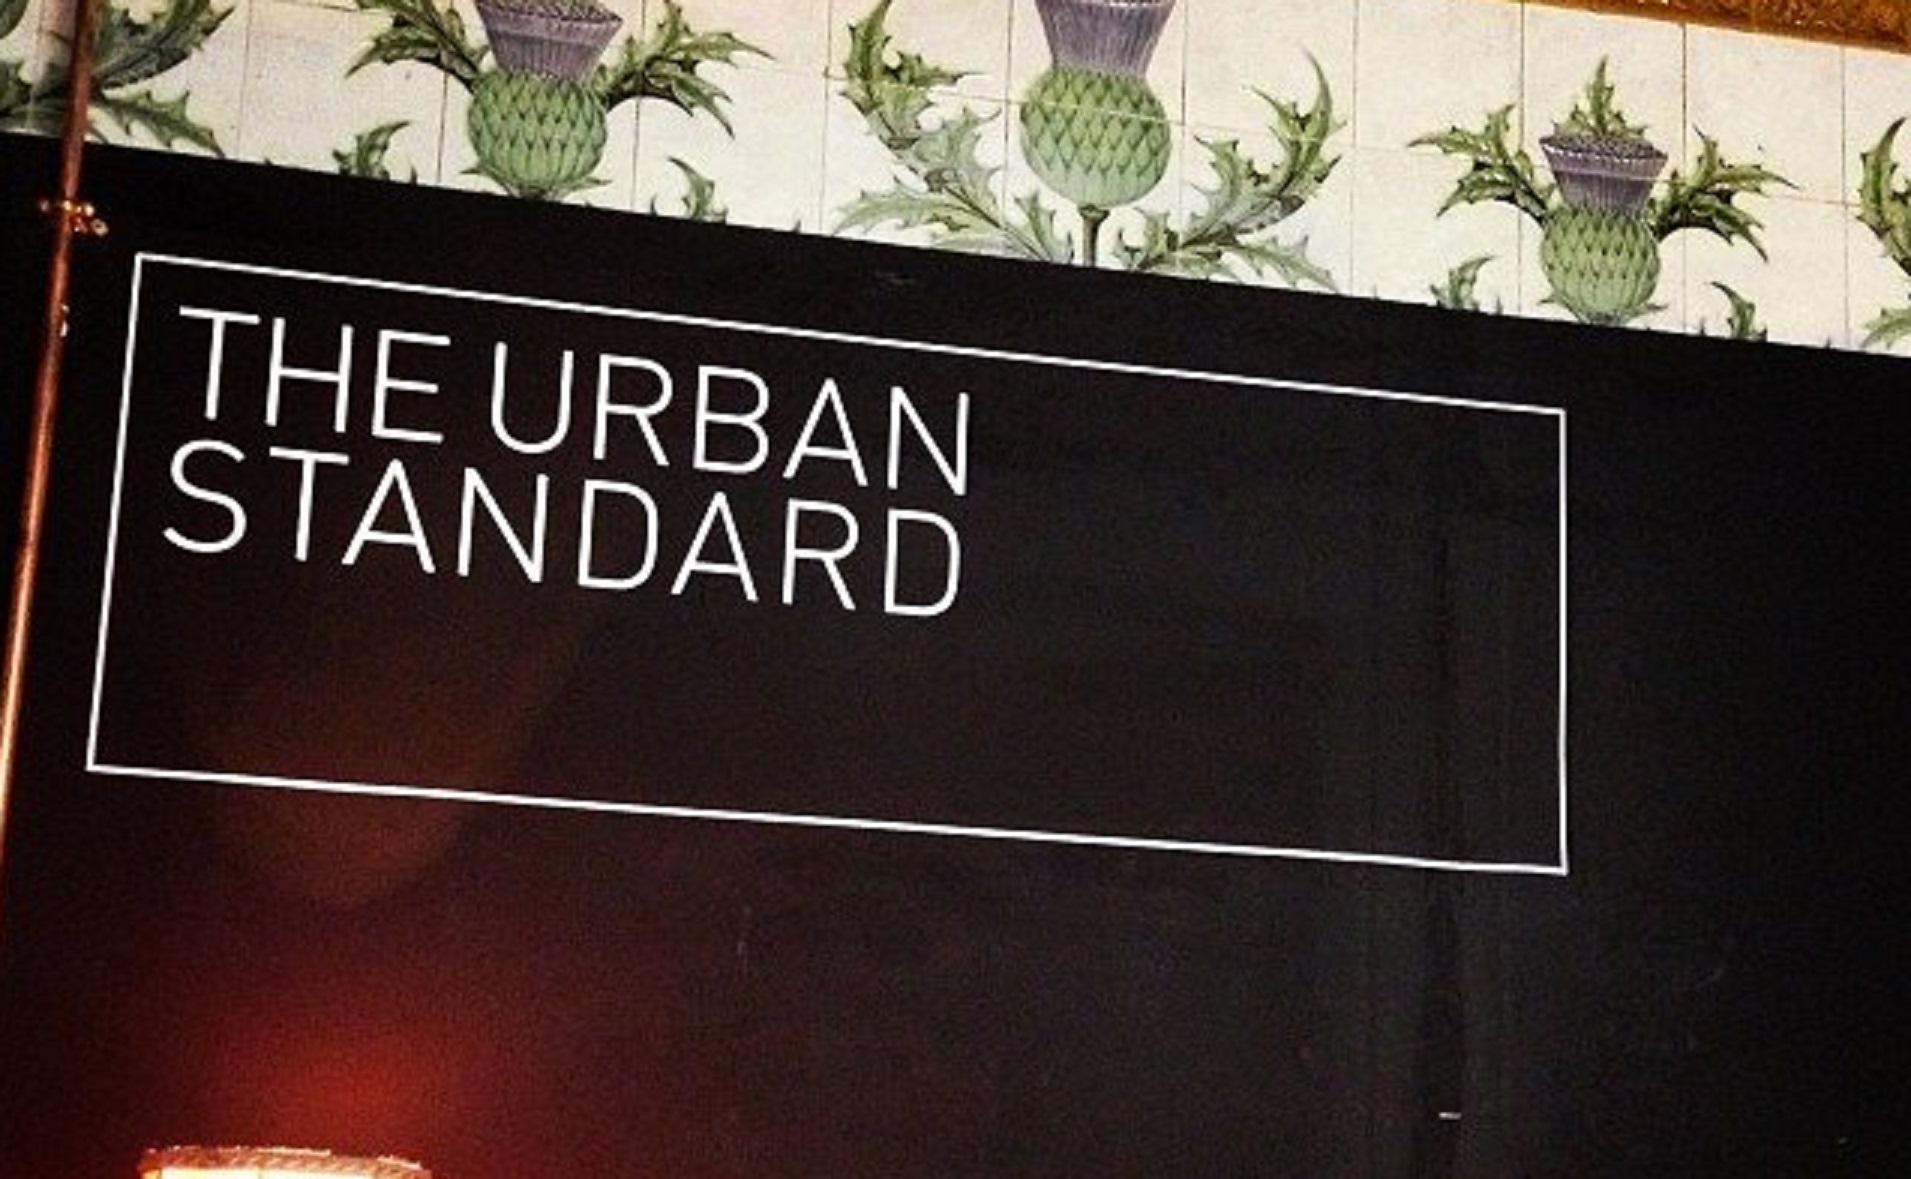 The Urban Standard